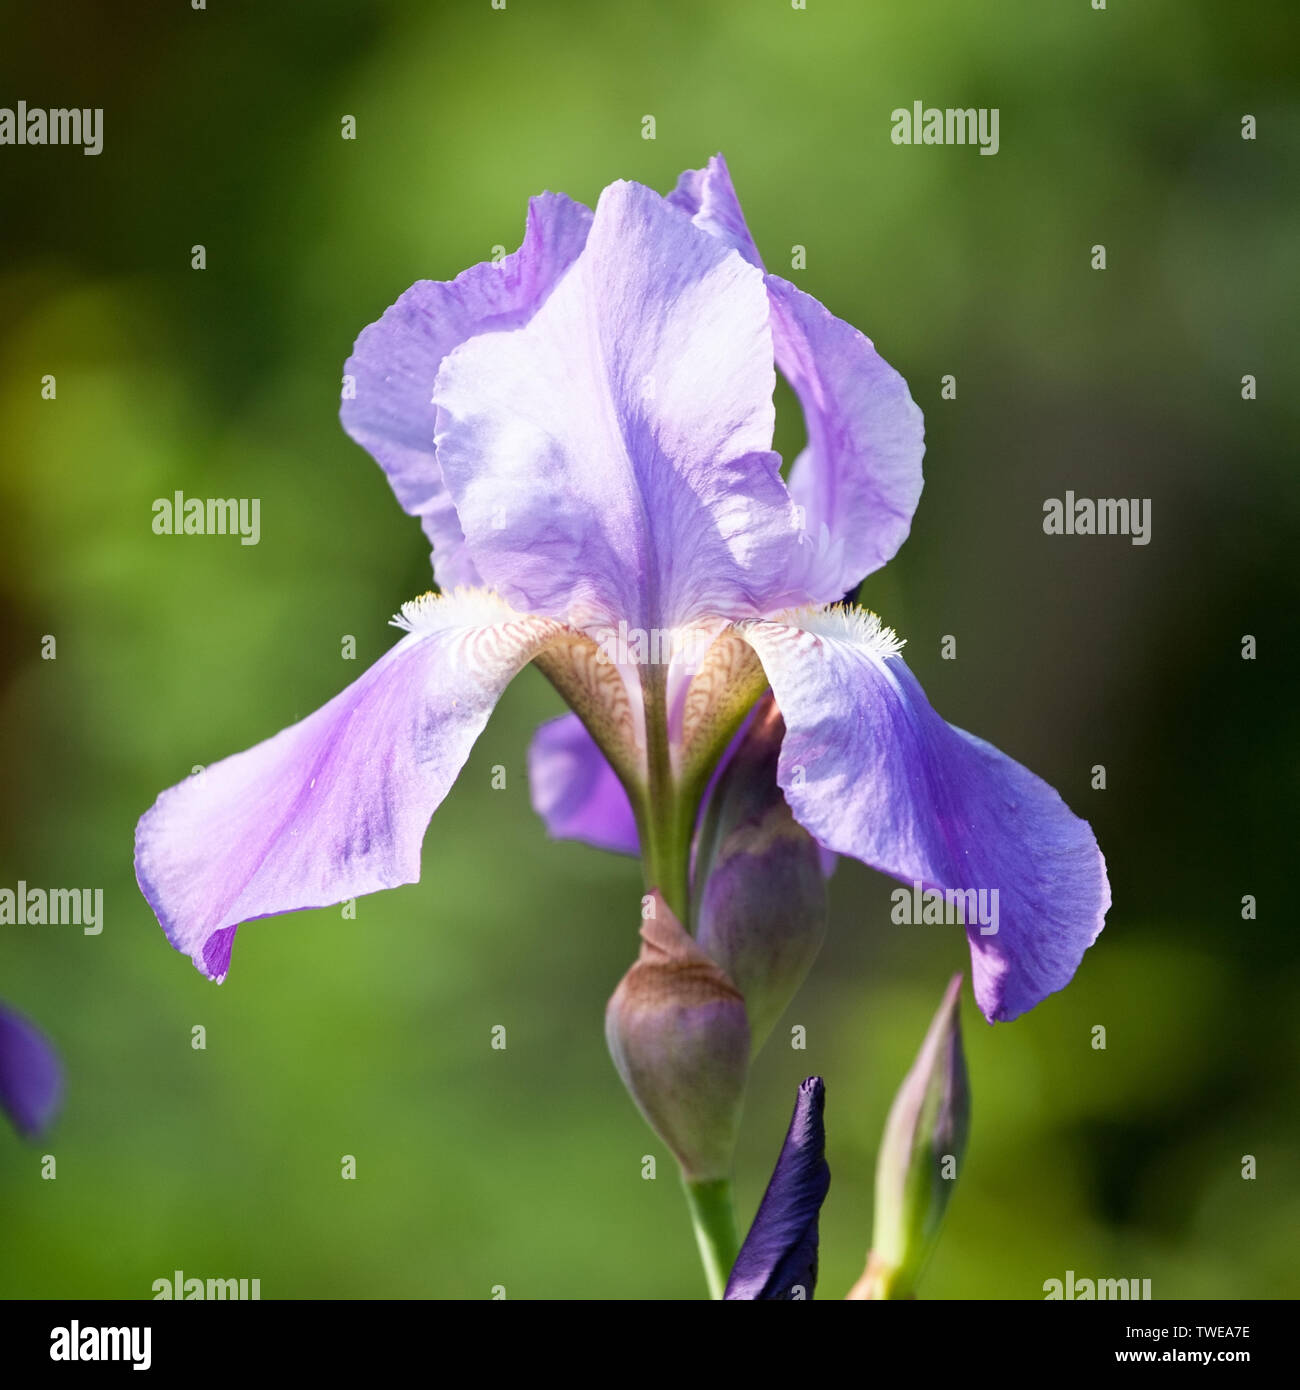 blue iris flower closeup view on outdoor garden daylight green leaves background Stock Photo